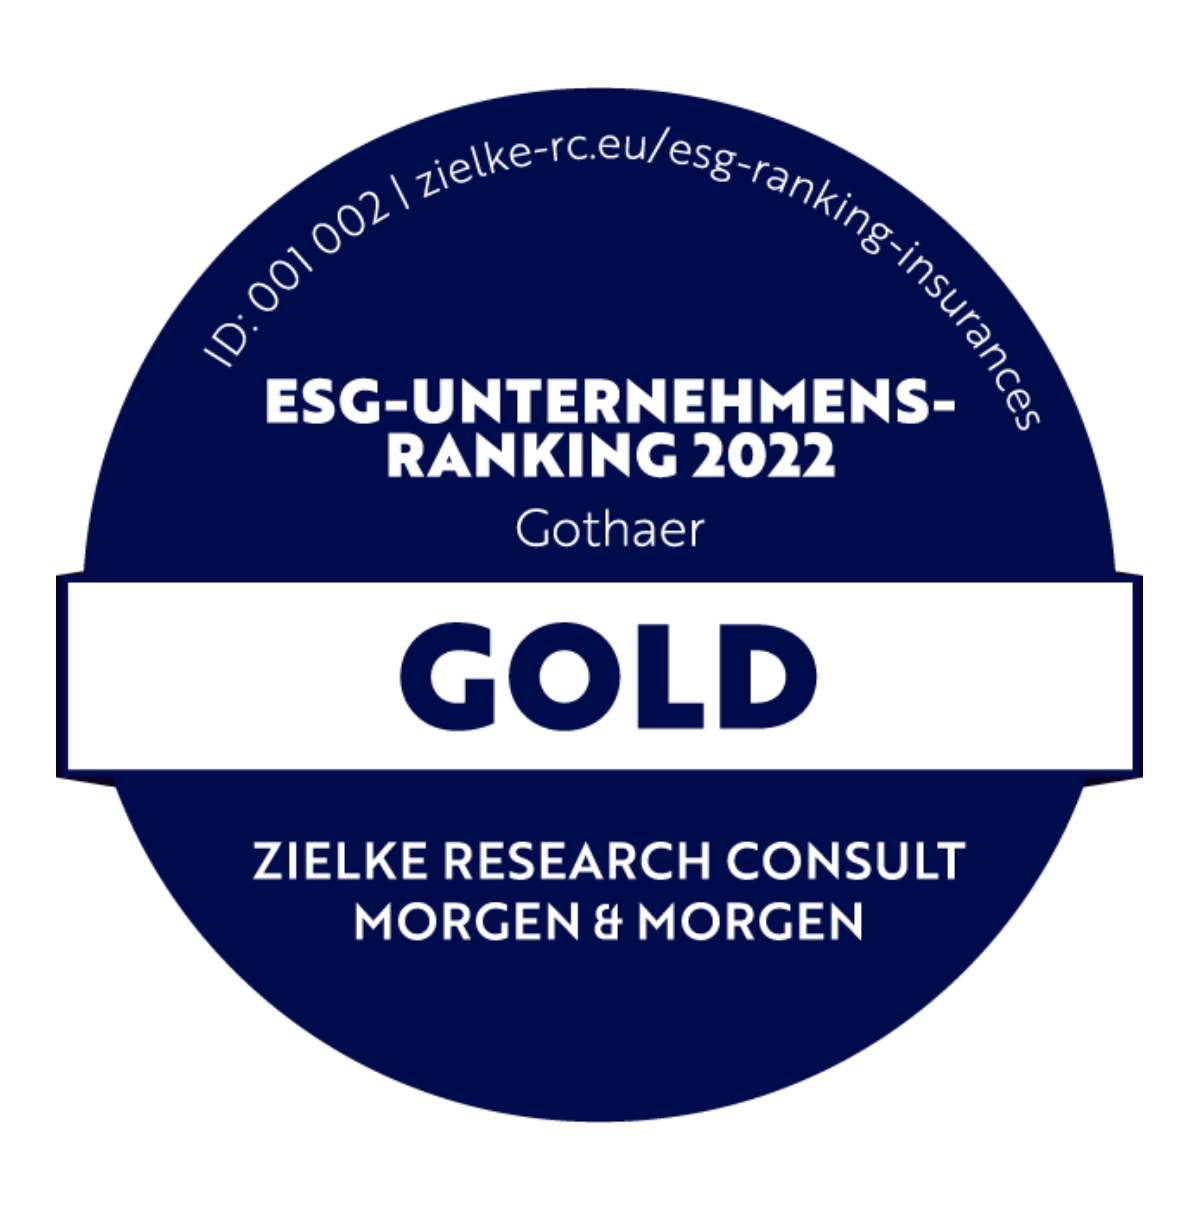 ESG-Unternehmens-Ranking 2022: Gold | Zielke Research Consult Morgen & Morgen